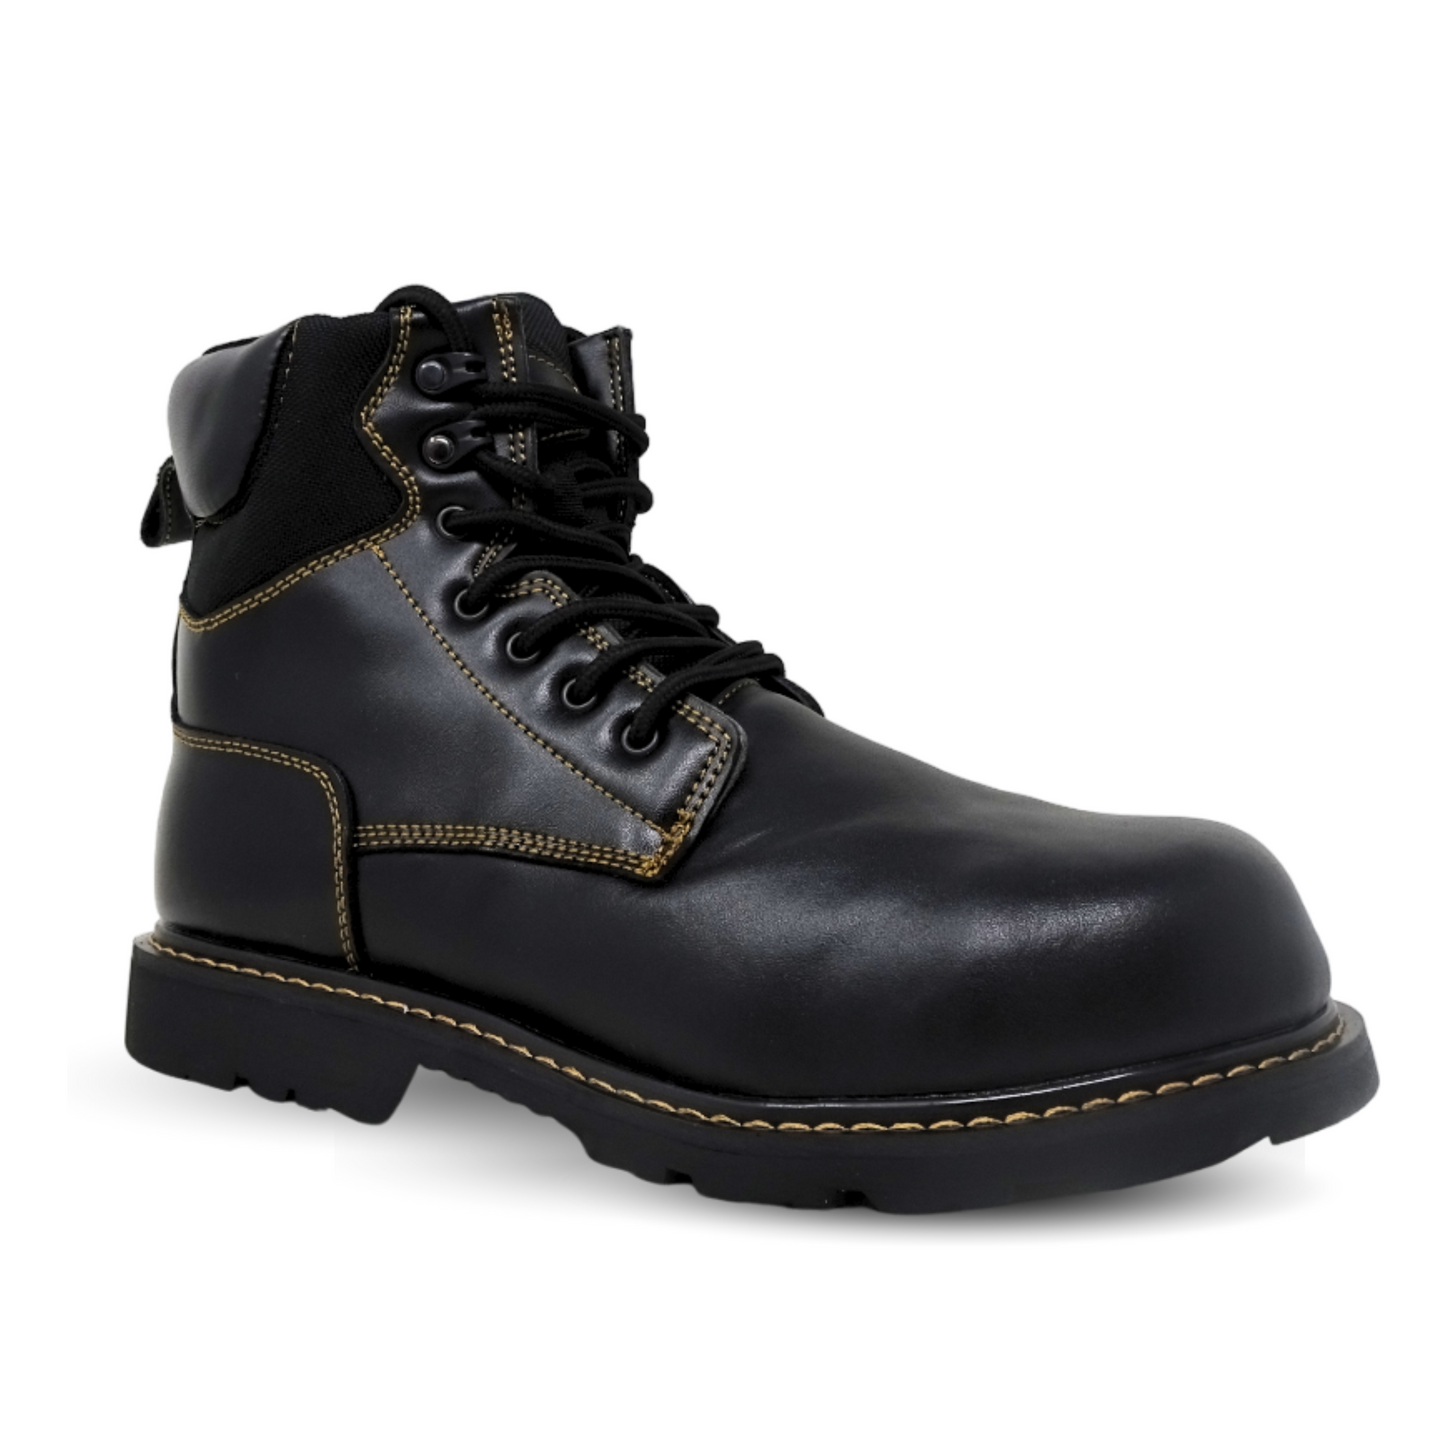 FITec 6508 - Men Oil / Slip Resistant Work Boots Composite Toe